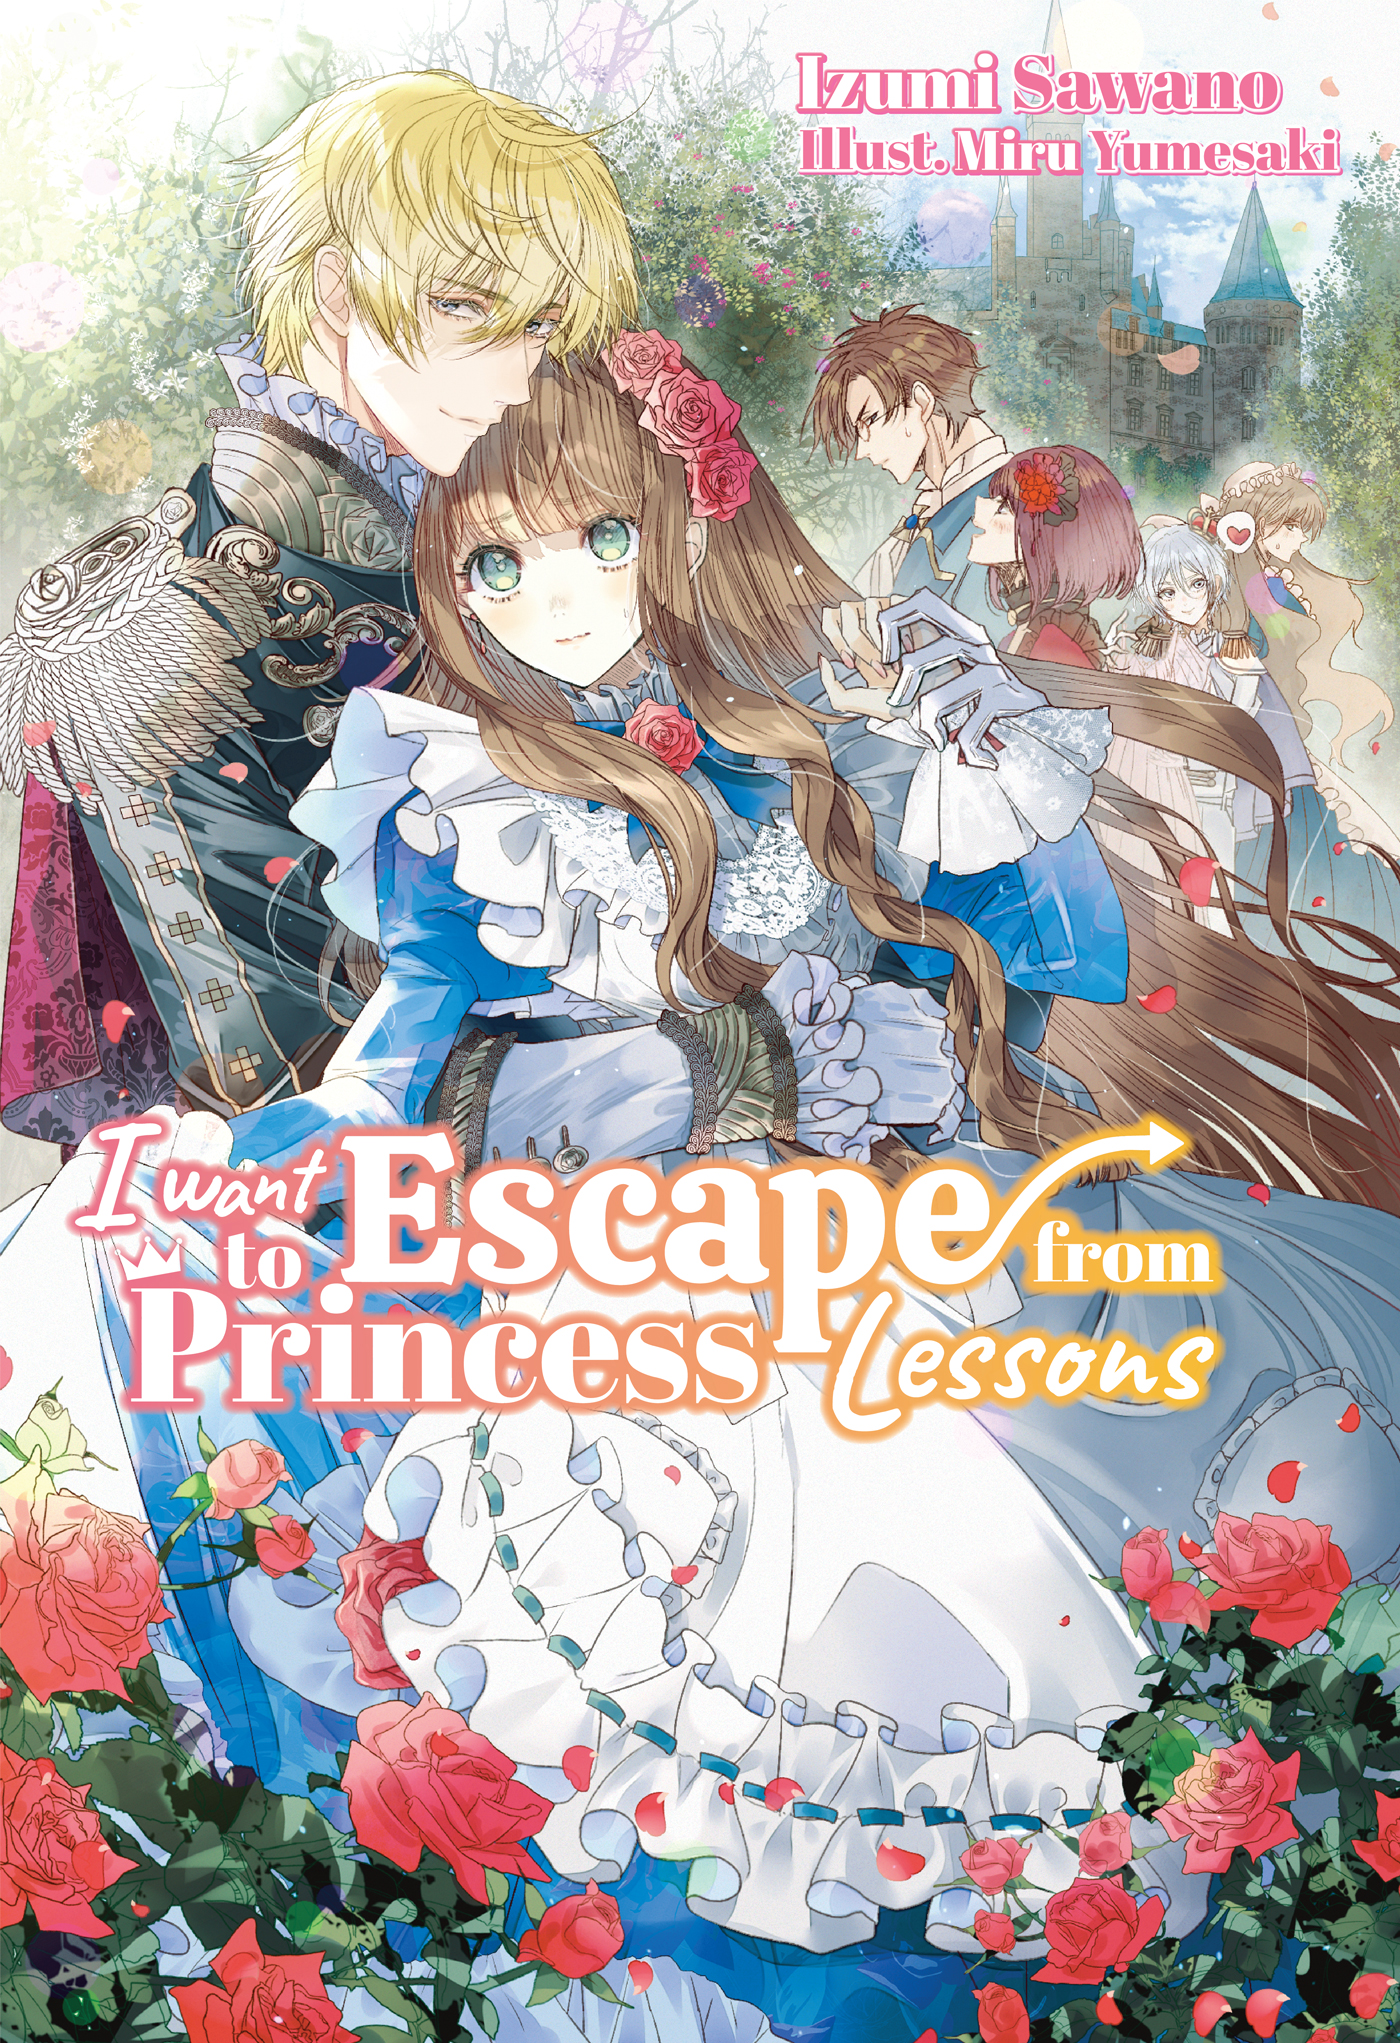 I Want to Escape from Princess Lessons by Izumi Sawano (Story), Miru Yumesaki (Illustrations)